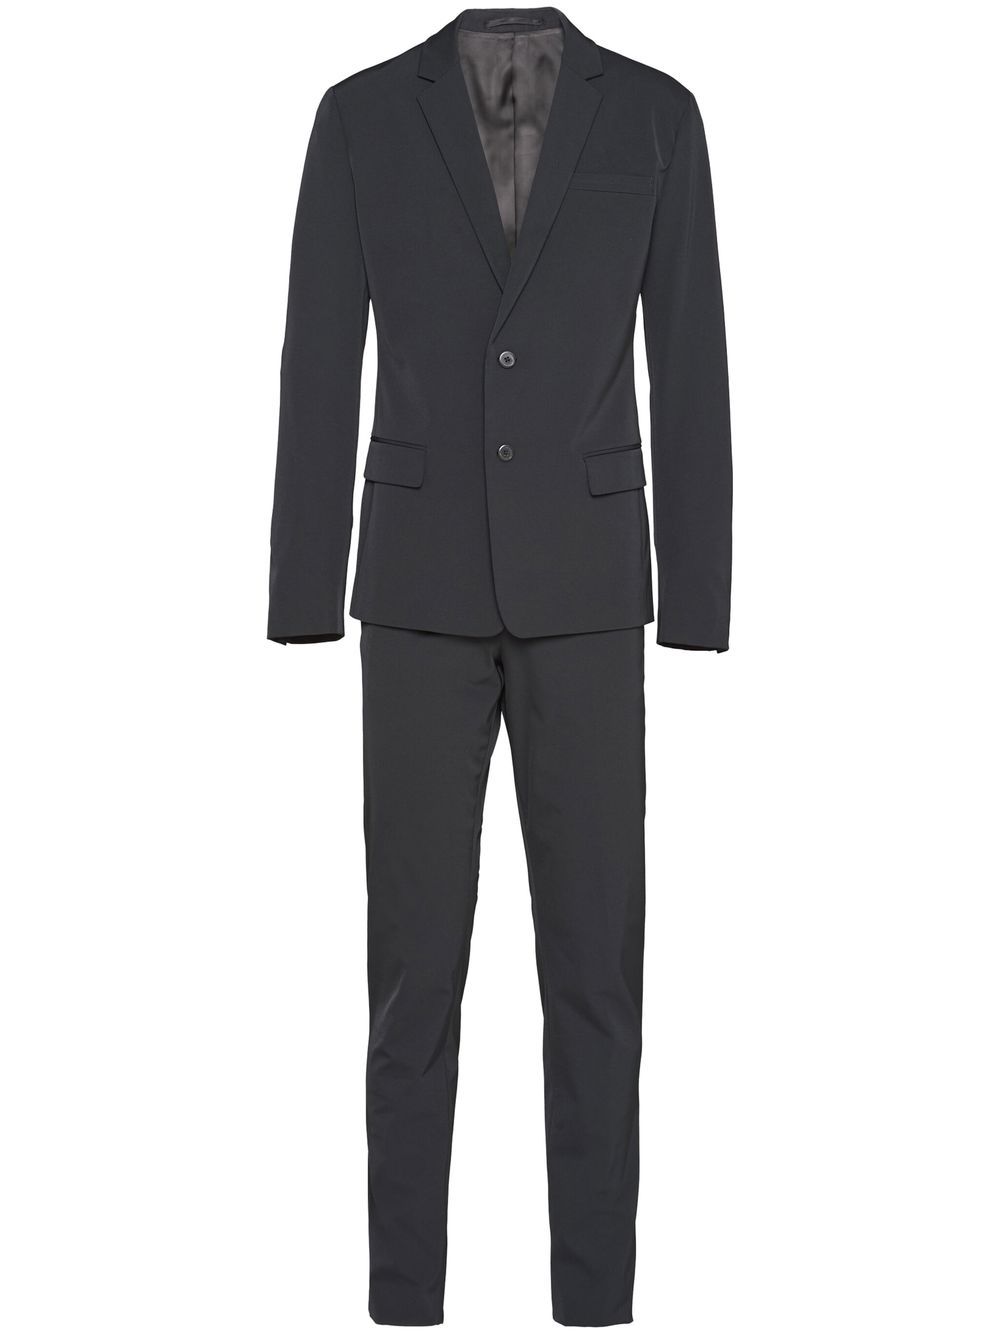 Image 1 of Prada single-breasted techno suit